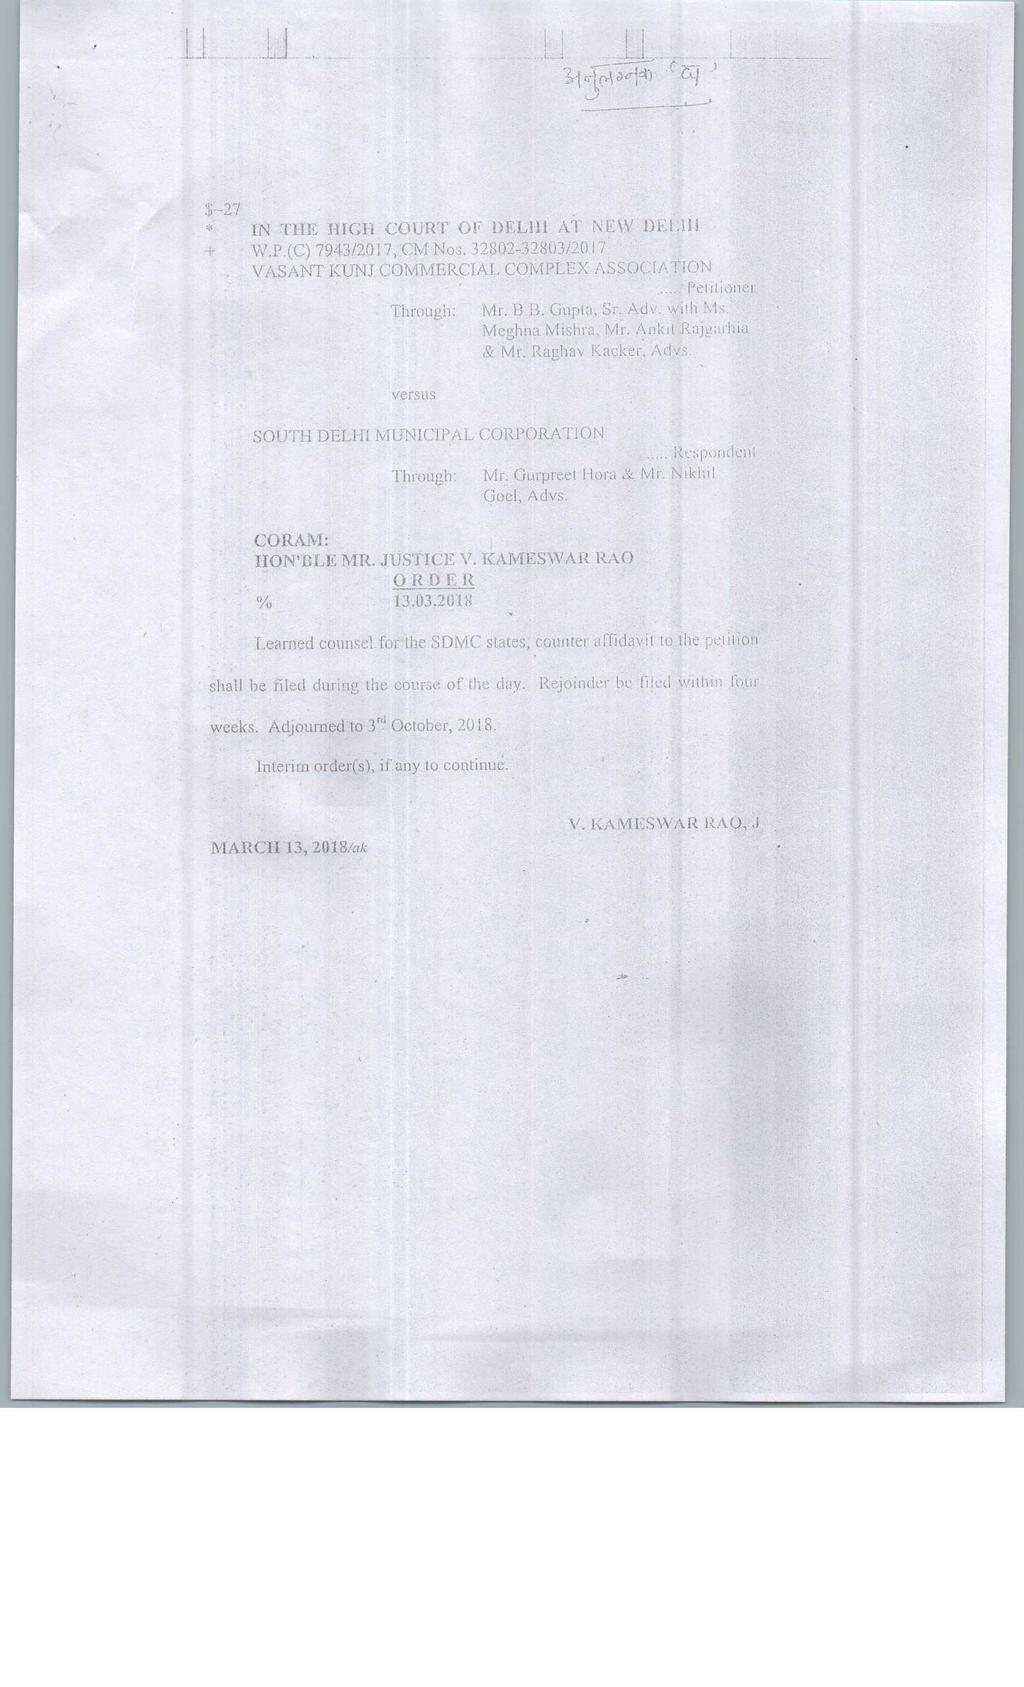 ..I!./iL..,.:;. S~27 IN THE HIGH COURT OF DELHI AT'NEW DELHI +"W.P.(C) 7943/2017, CM Nos. 32802-32803/2017 ft.vasant KUNJ COMMERCIAL COMPLEX ASSOCIATION,'' Petitioner Through: Mr. B.B. Gupbi, Sr. Adv.